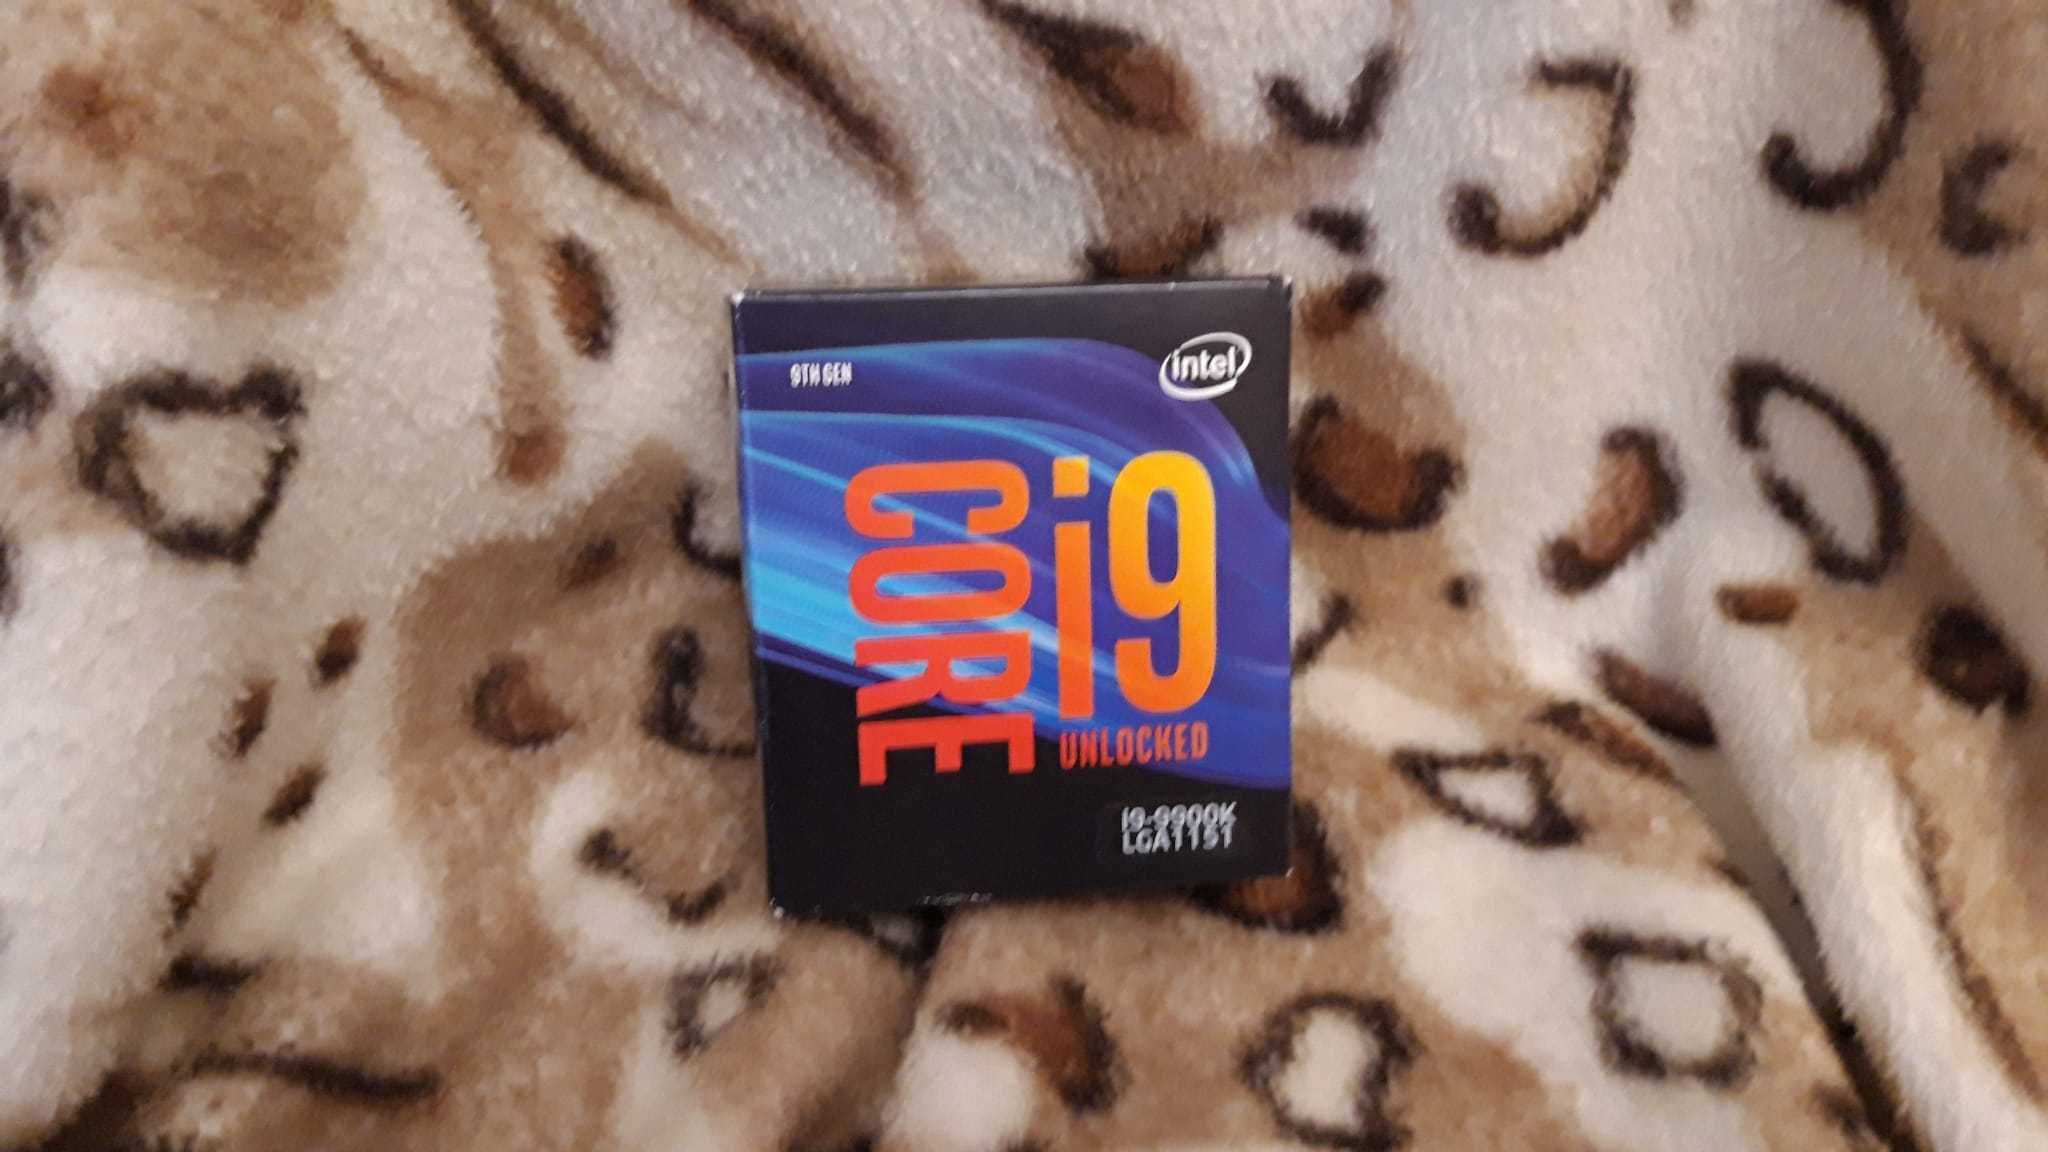 procesor Gaming i9-9900K, 8/16 Core, 3.6-5.0 GHz, nou, sigilat